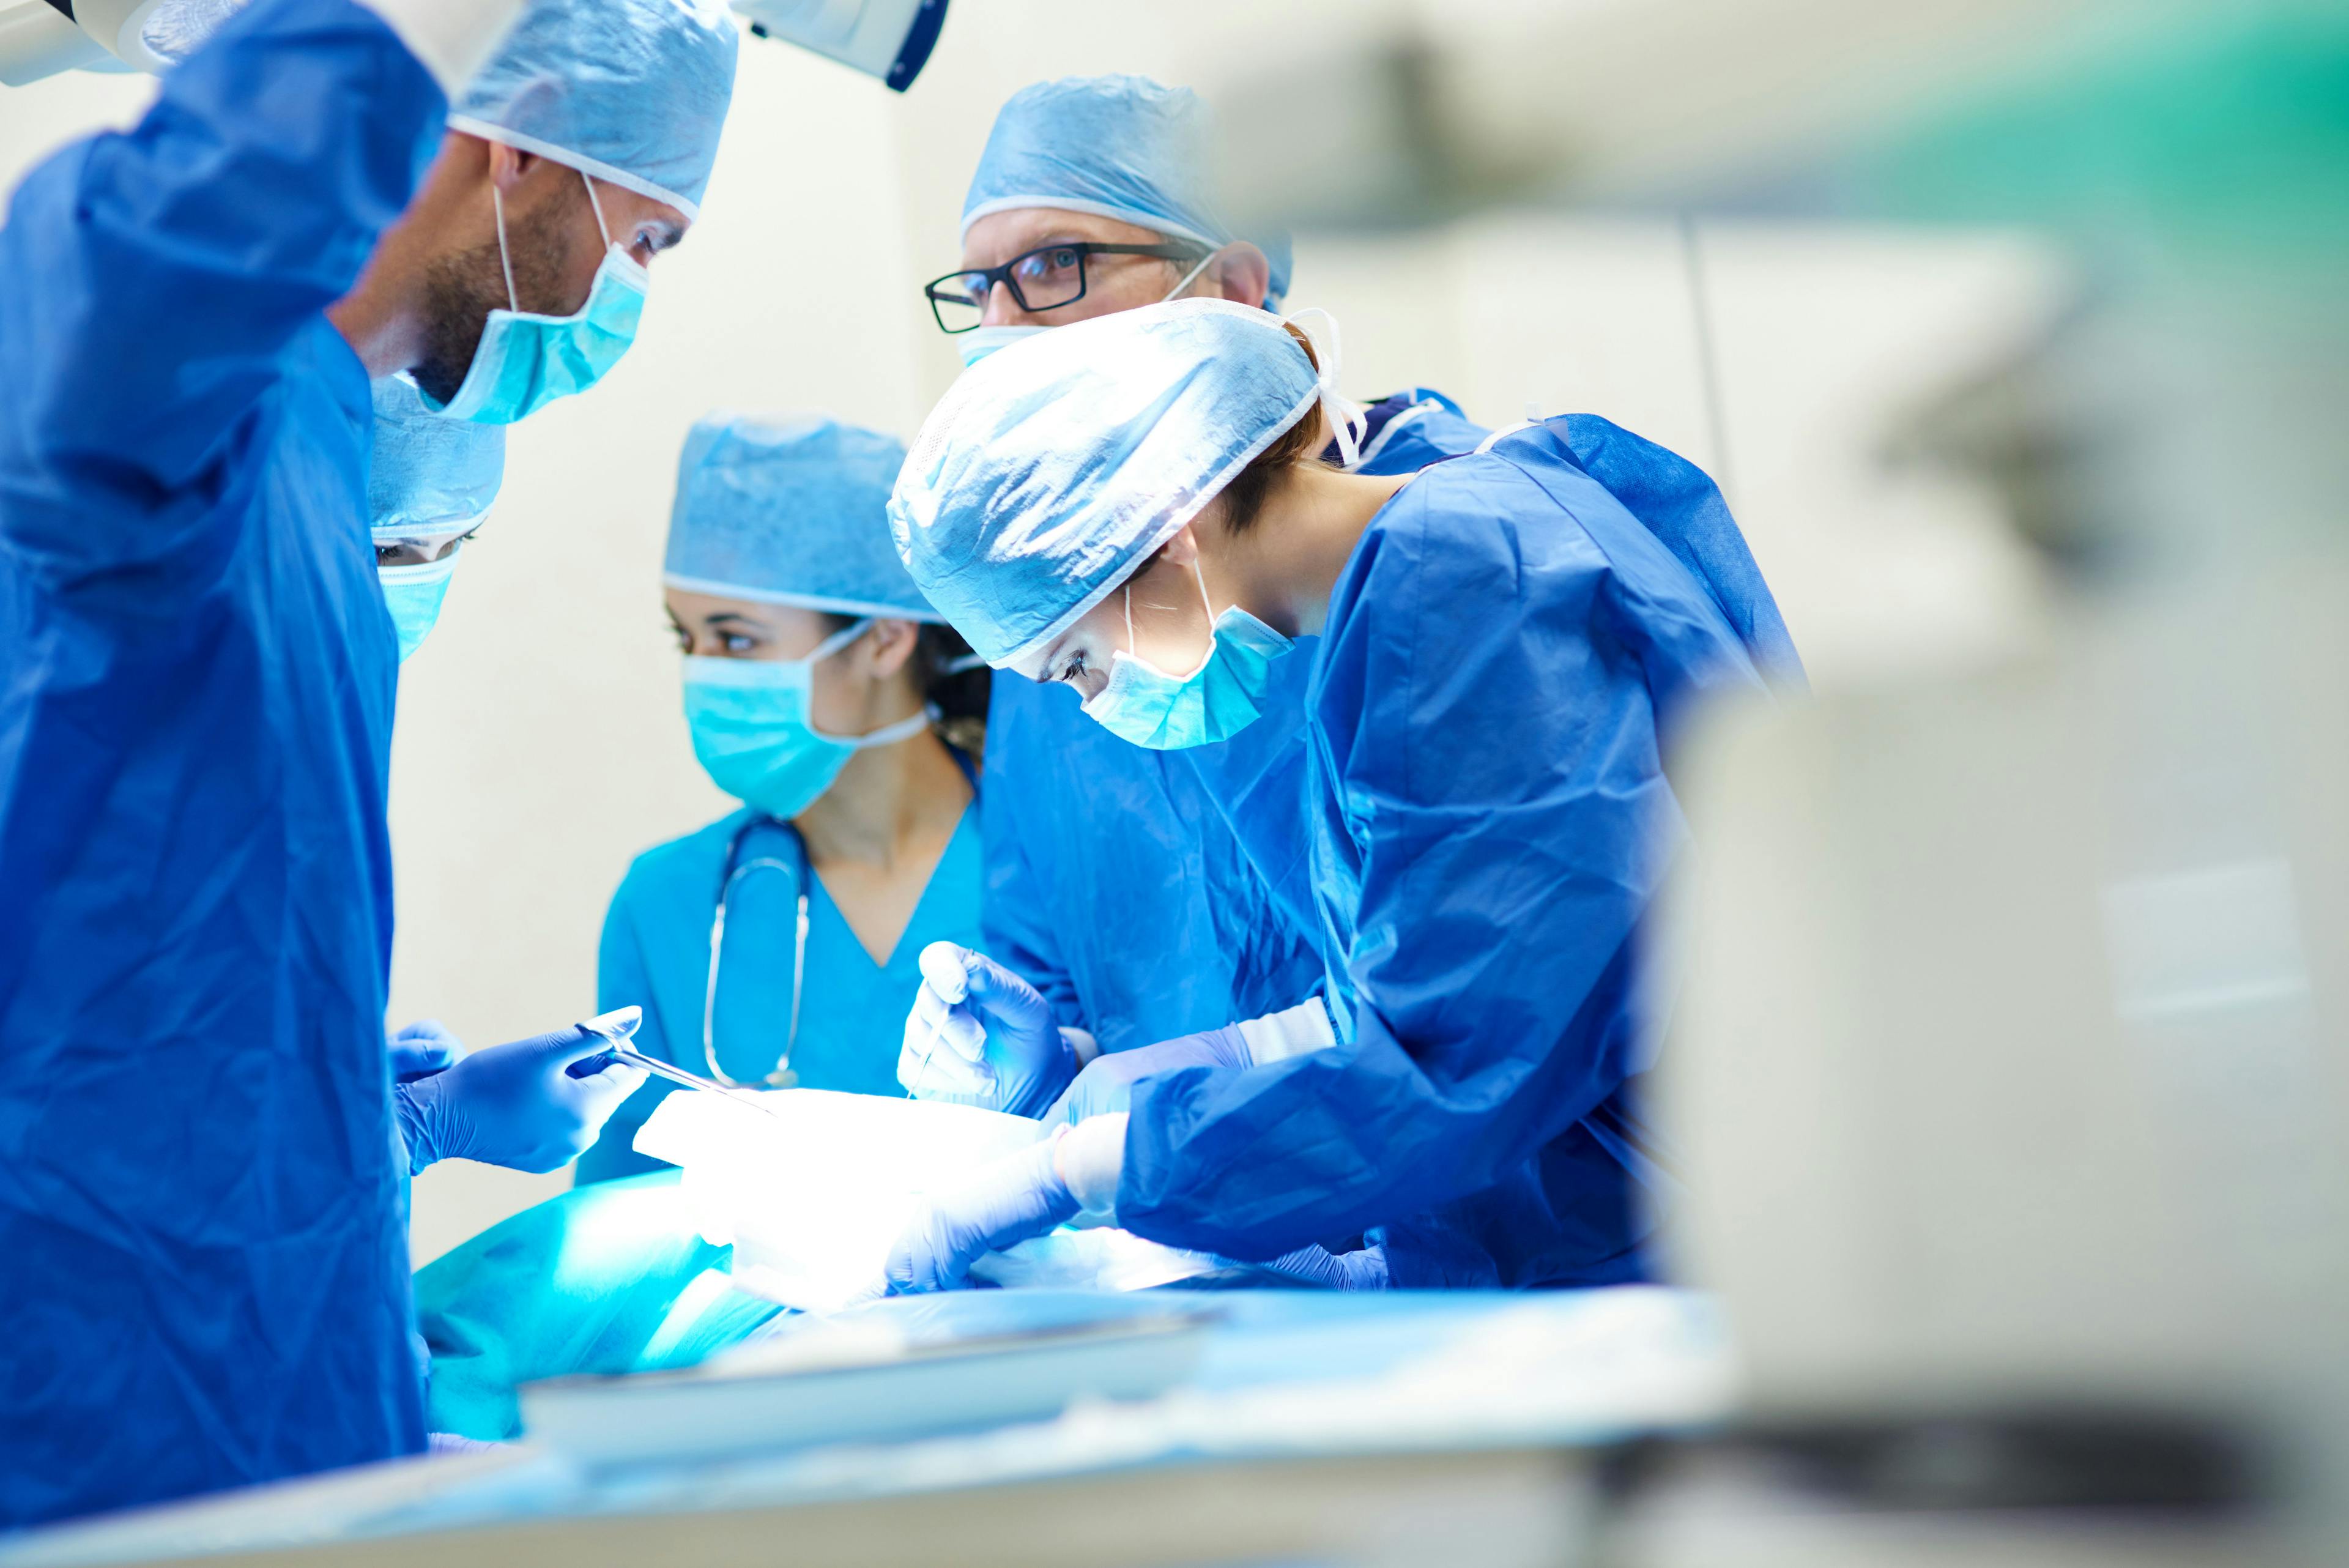 Doctors performing surgery | Image credit: gpointstudio - stock.adobe.com